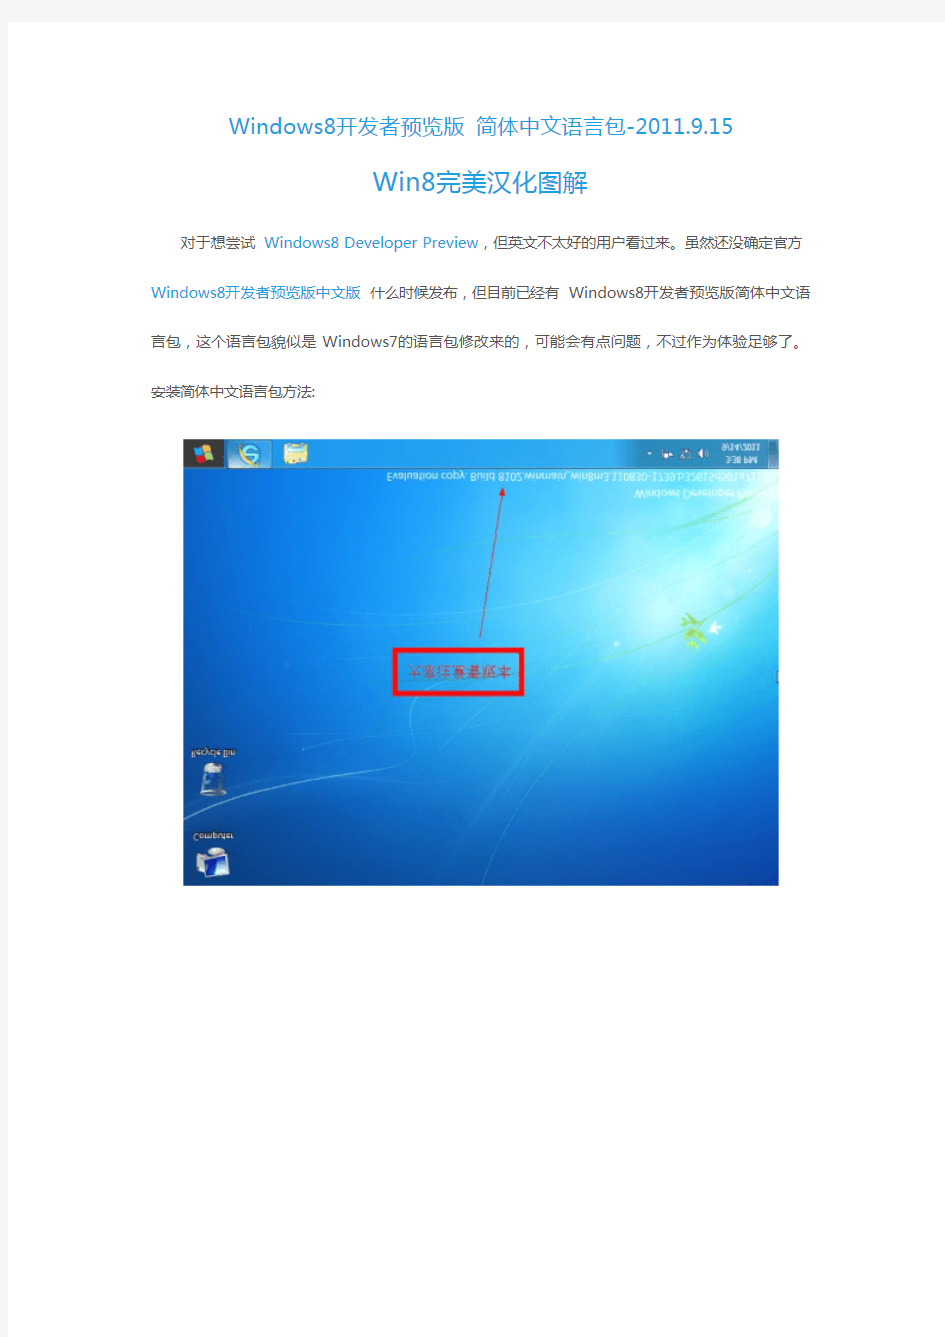 Windows8开发者预览版-Win8完美汉化图解 简体中文语言包-2011.9.15